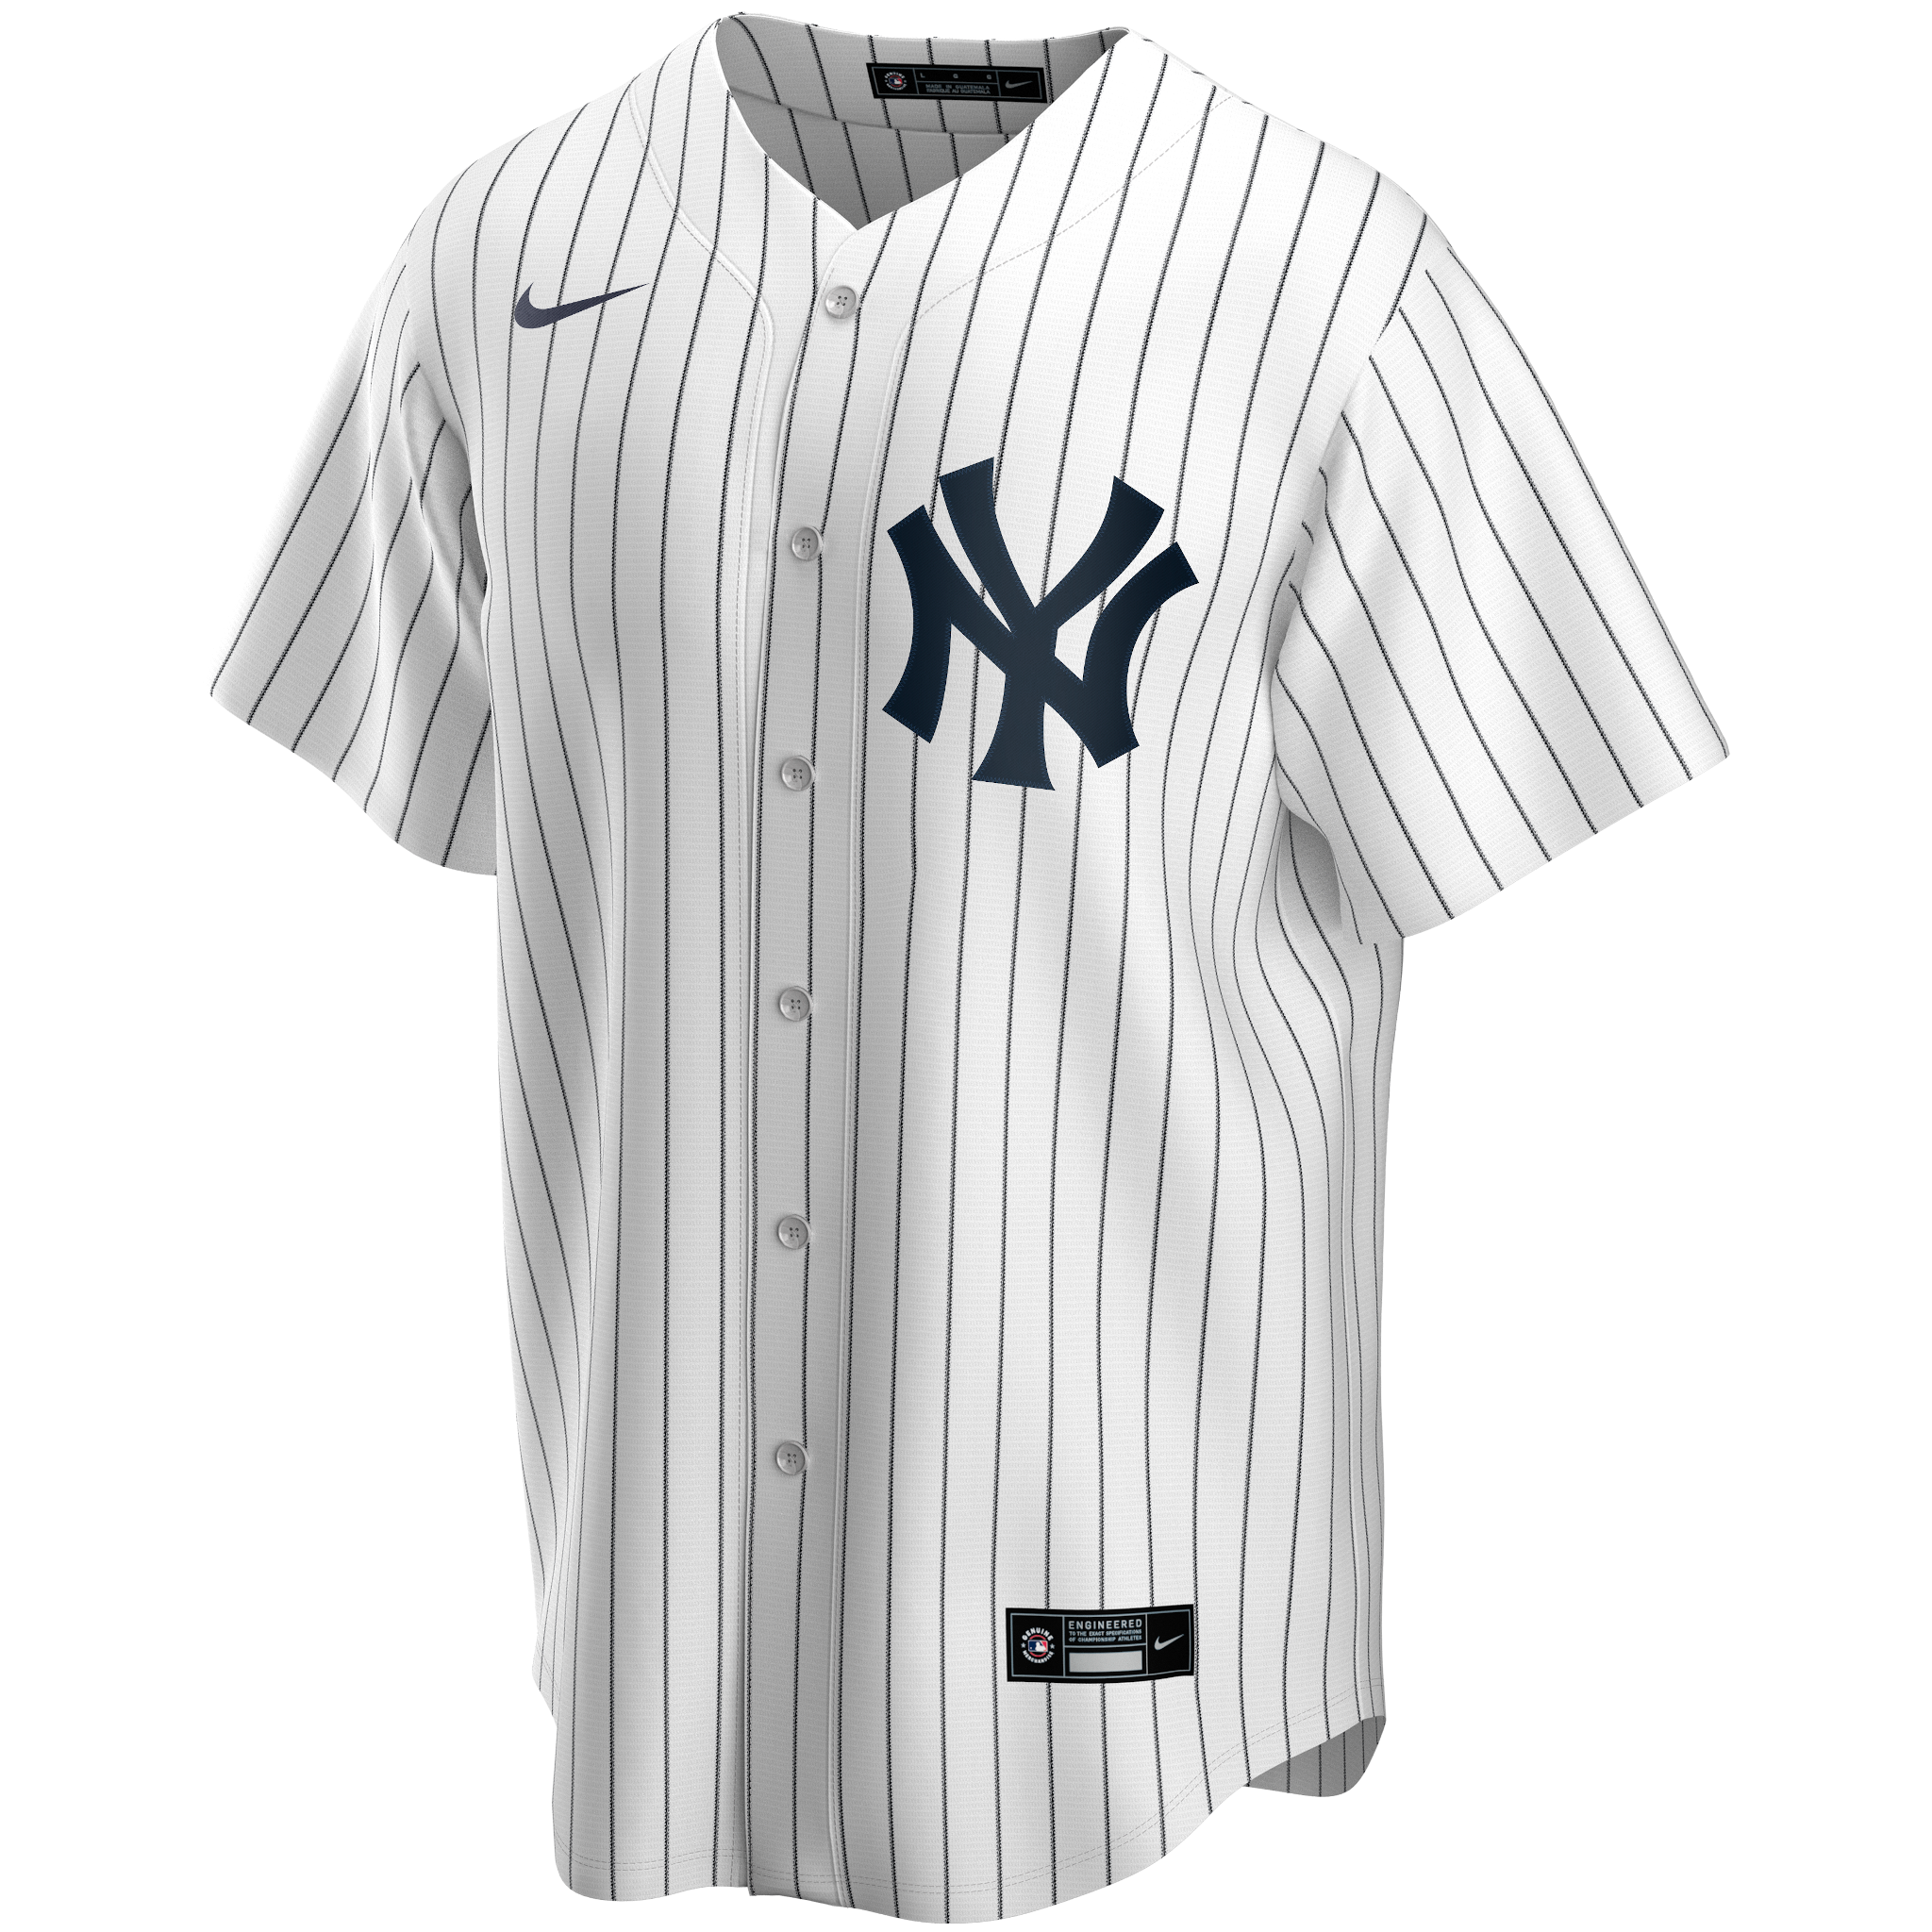 Majestic, Shirts, Paul Oneill New York Yankees Pinstripe Mlb Vintage  Baseball Jersey